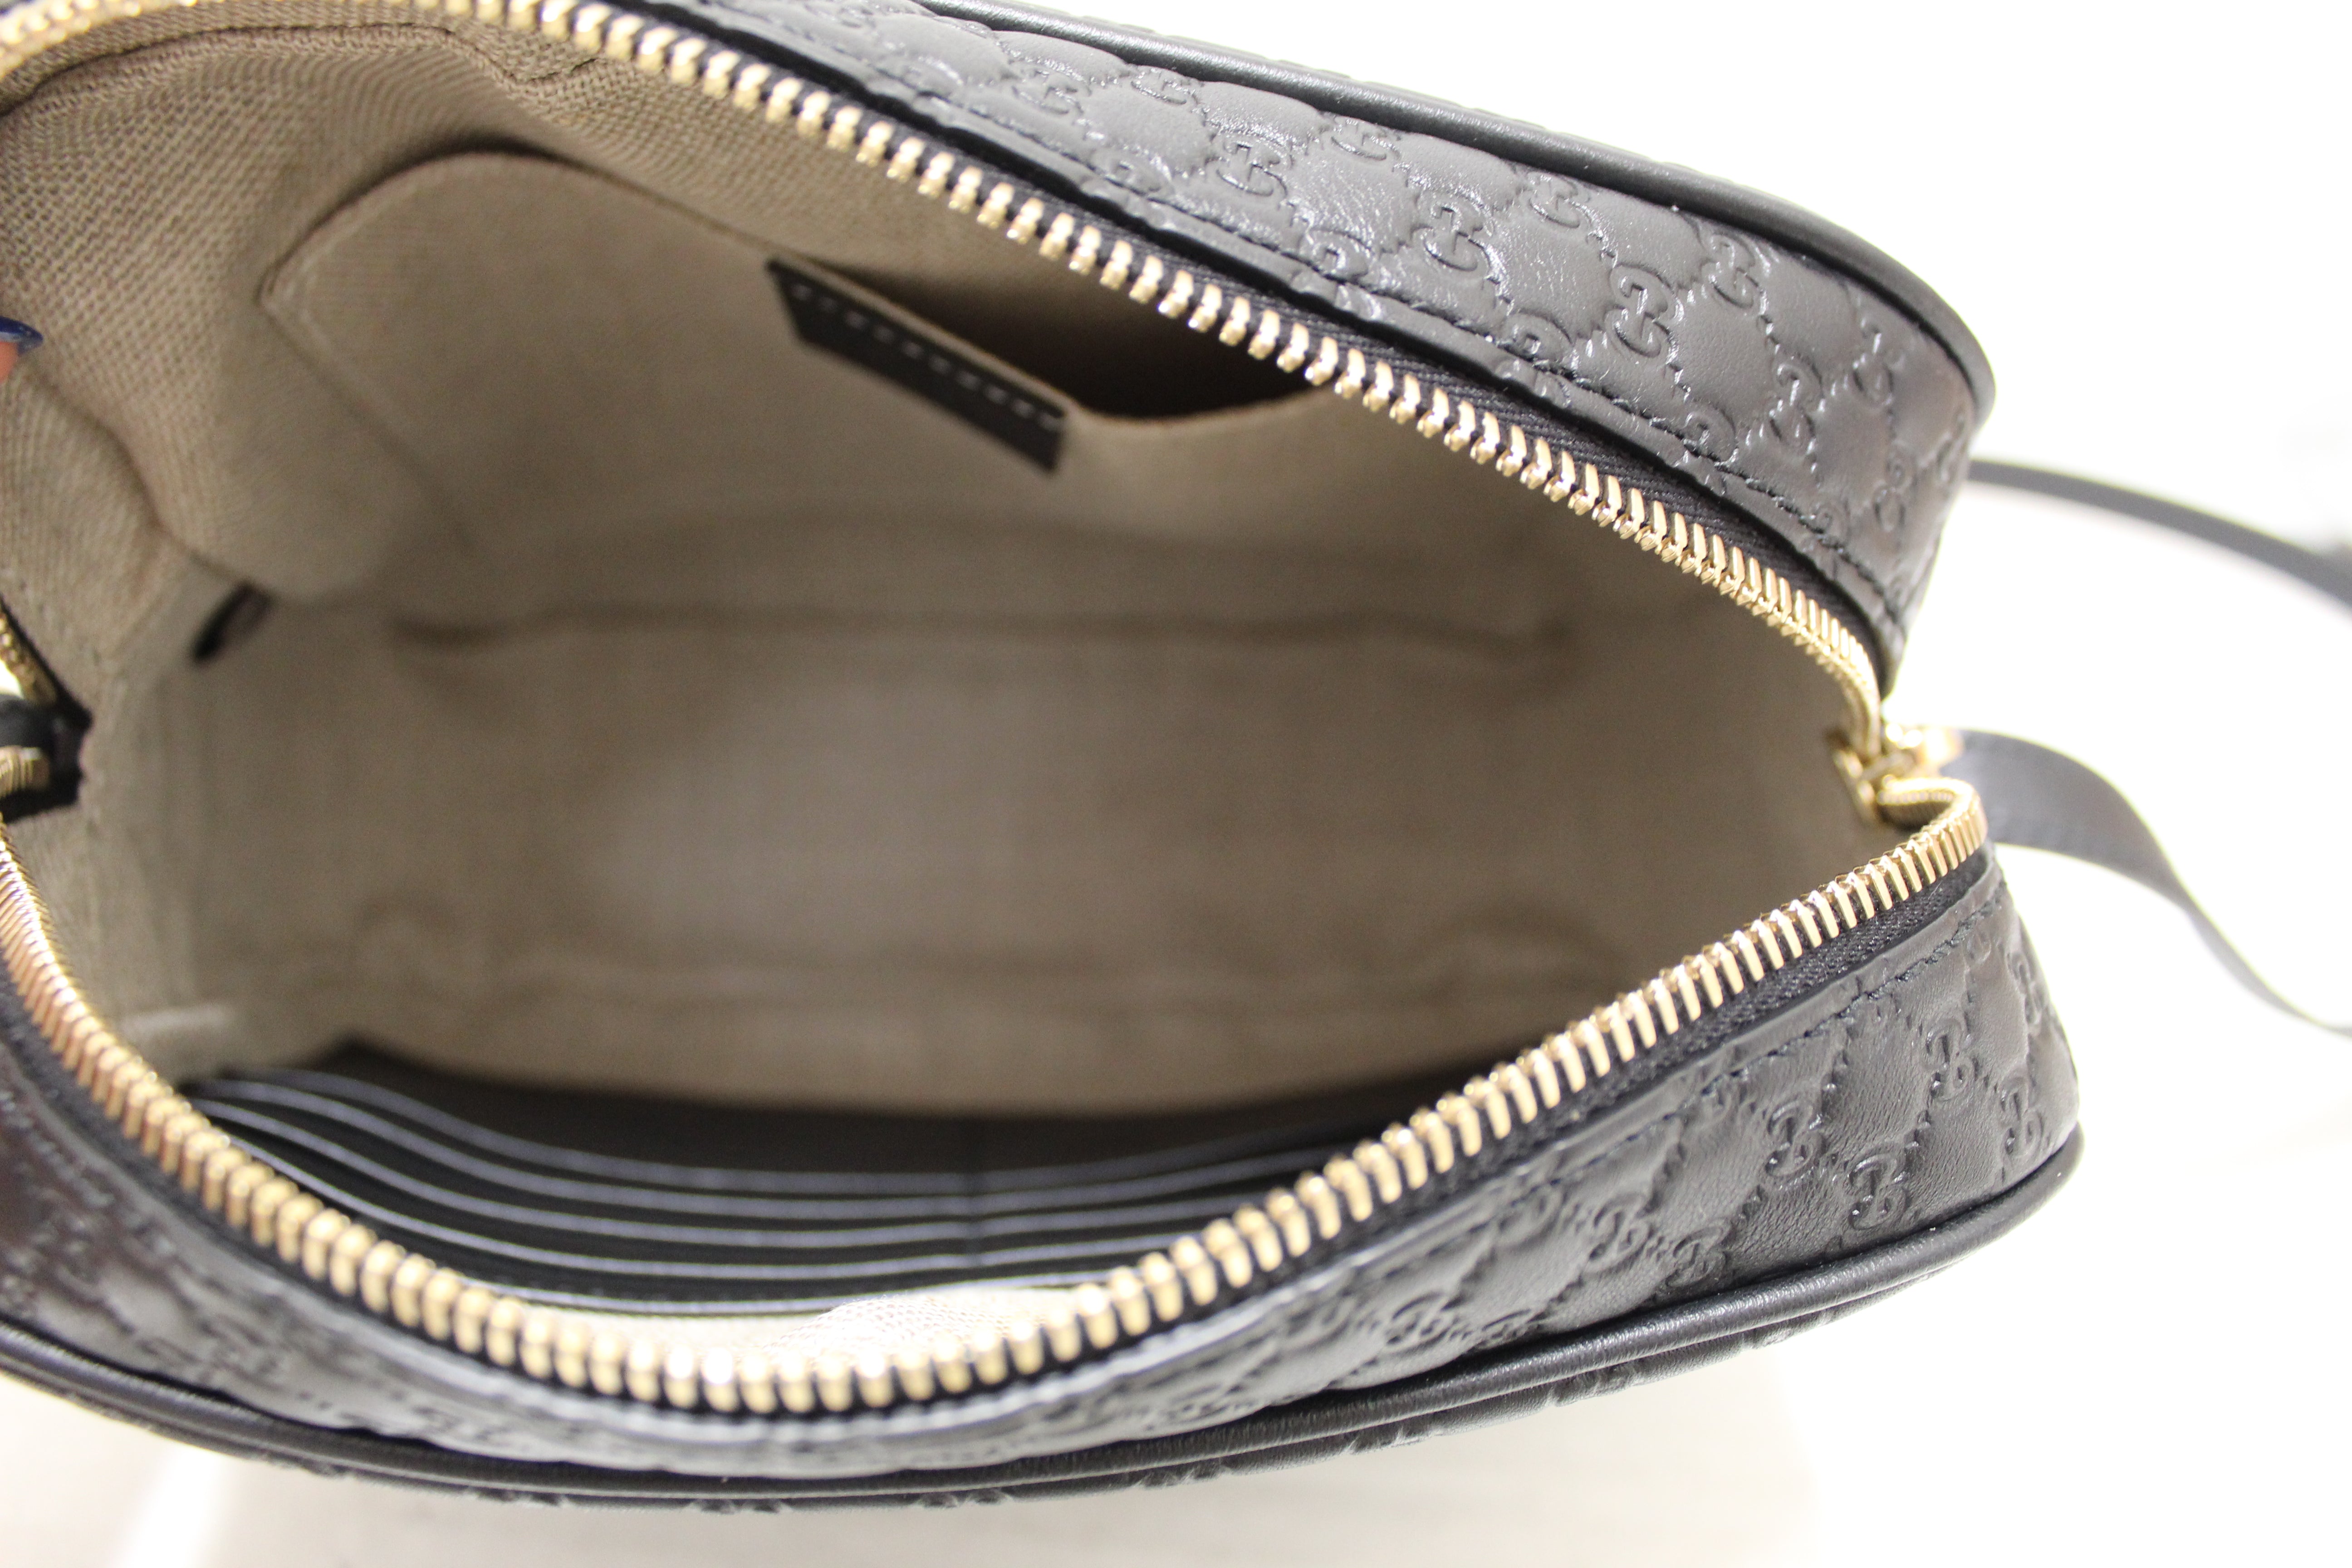 Authentic New Black Gucci GG MicroGuccissima Leather Bree Crossbody Bag